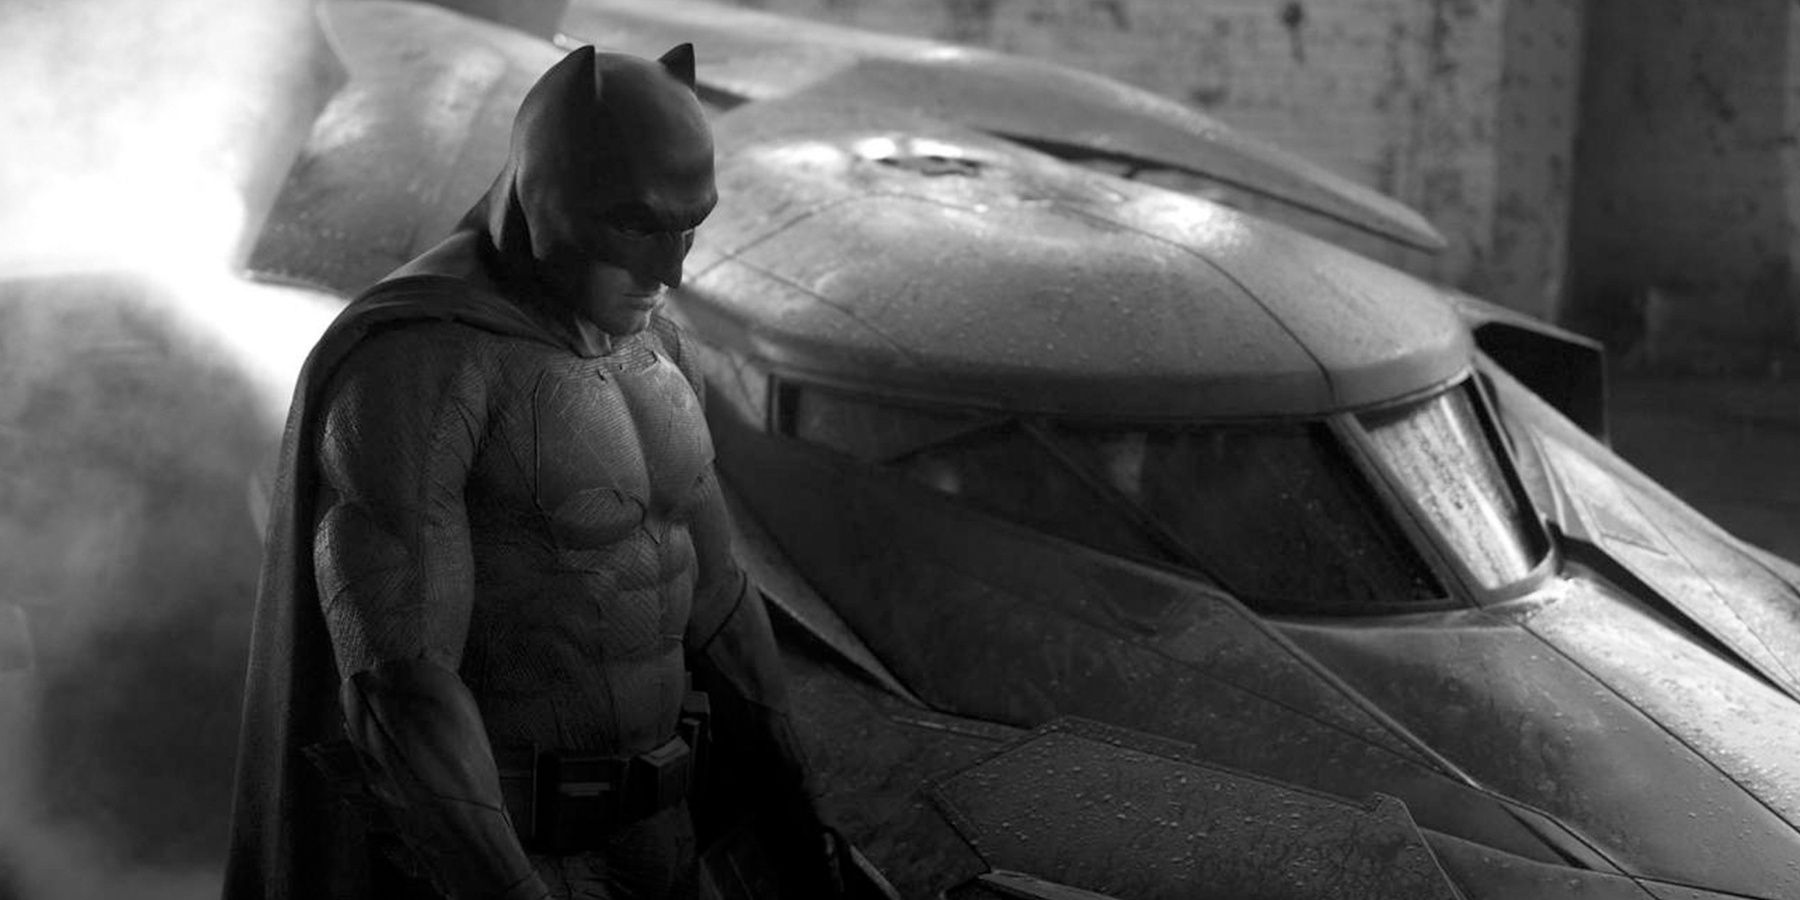 Ben Affleck as Batman next to the Batmobile in black and white